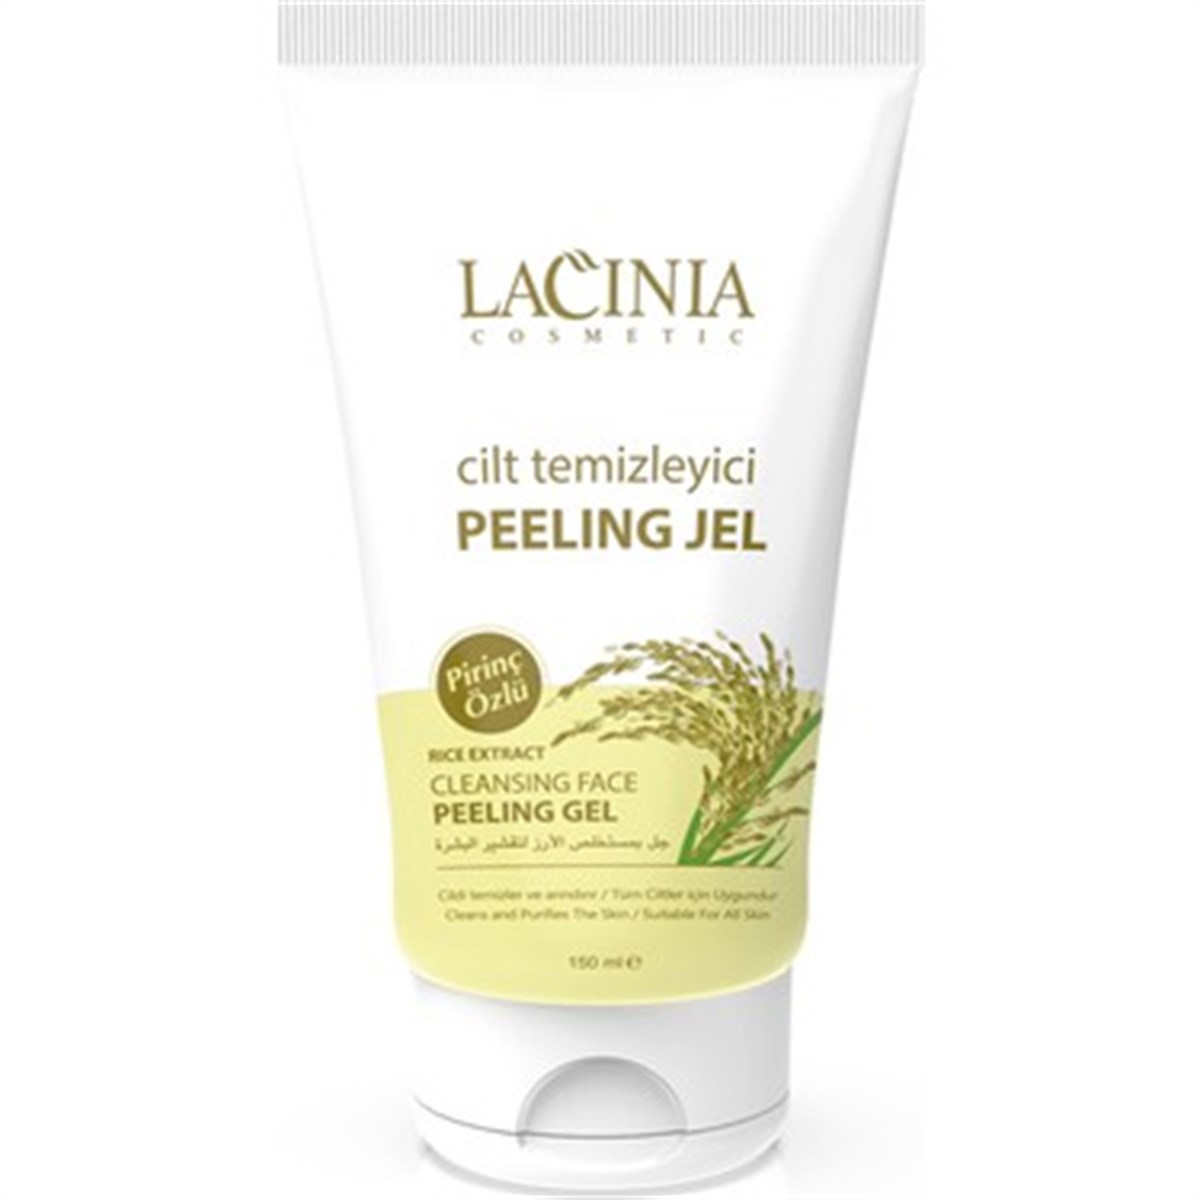 Lacinia Face Cleansing Peeling Gel 150 ml.-LeylekKapida.com